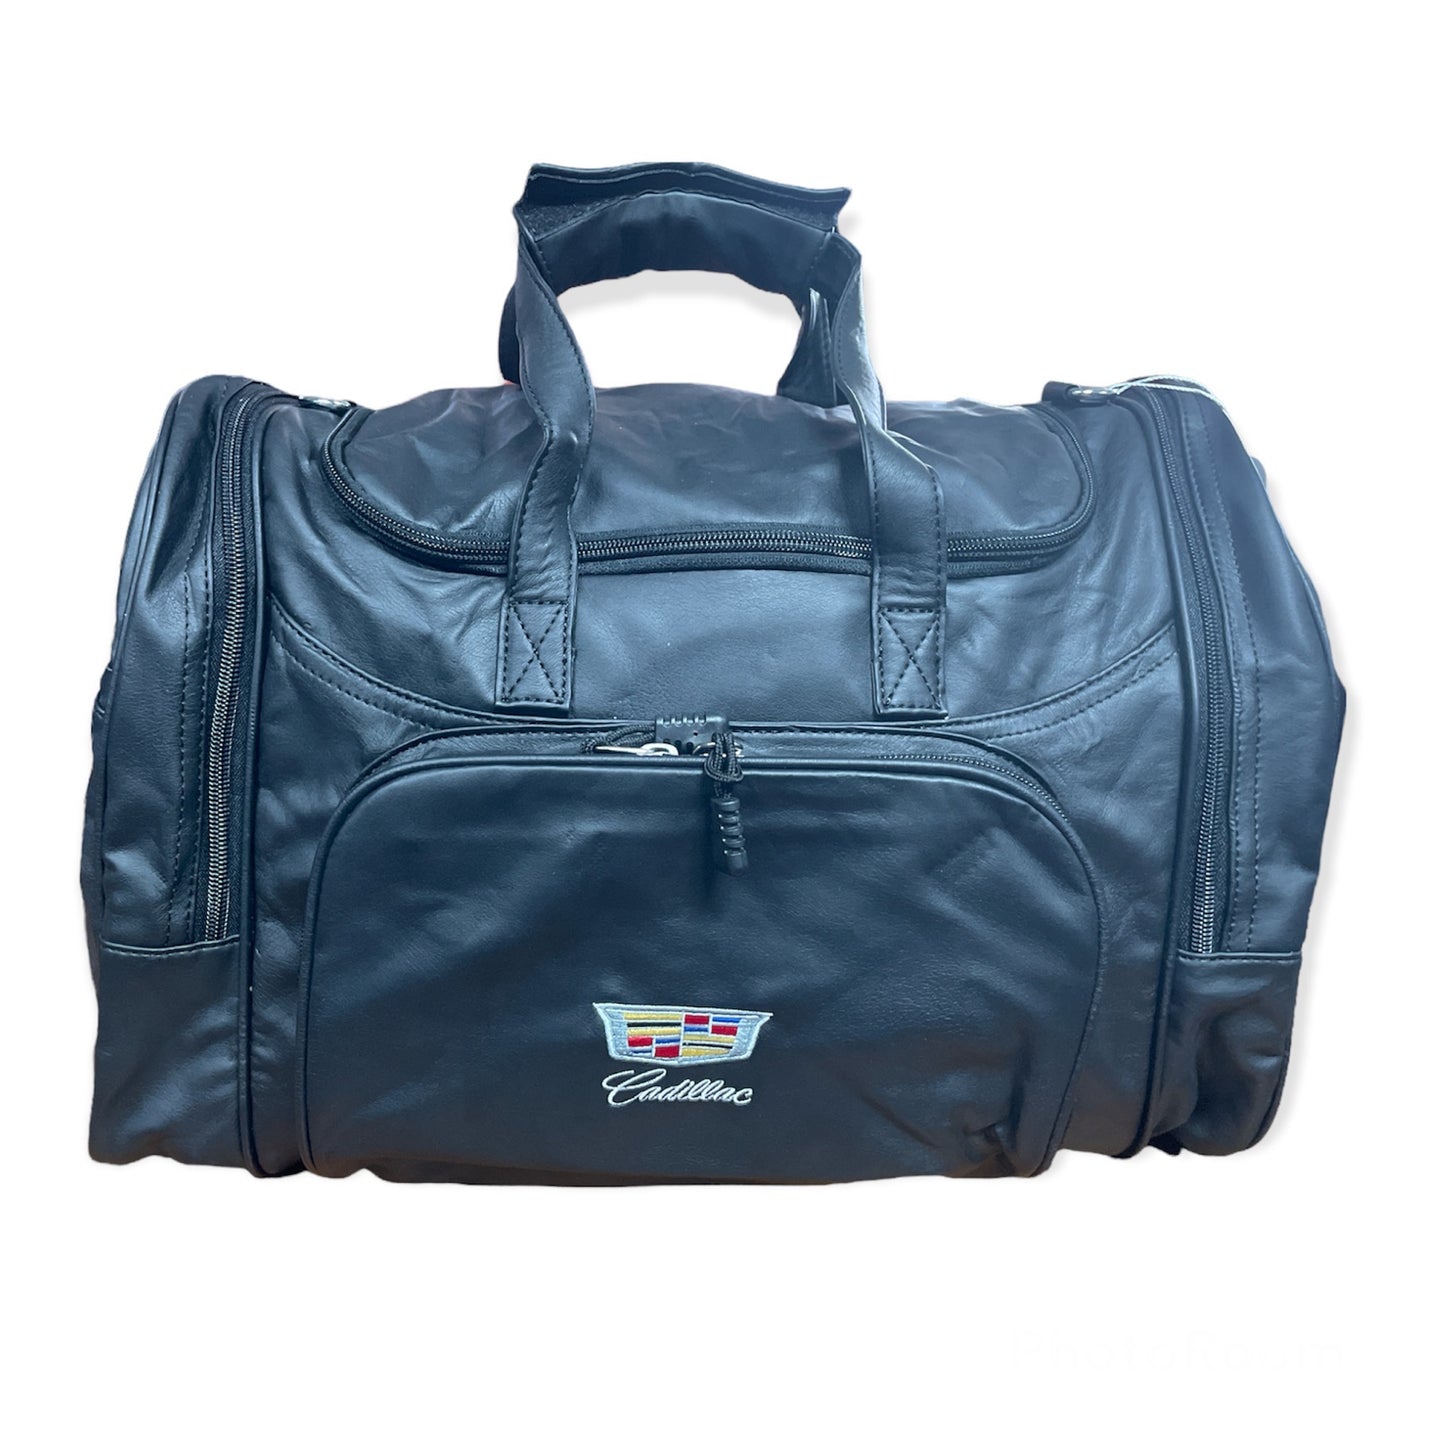 Cadillac Reisetasche Sporttasche Duffel Bag Leder Schwarz